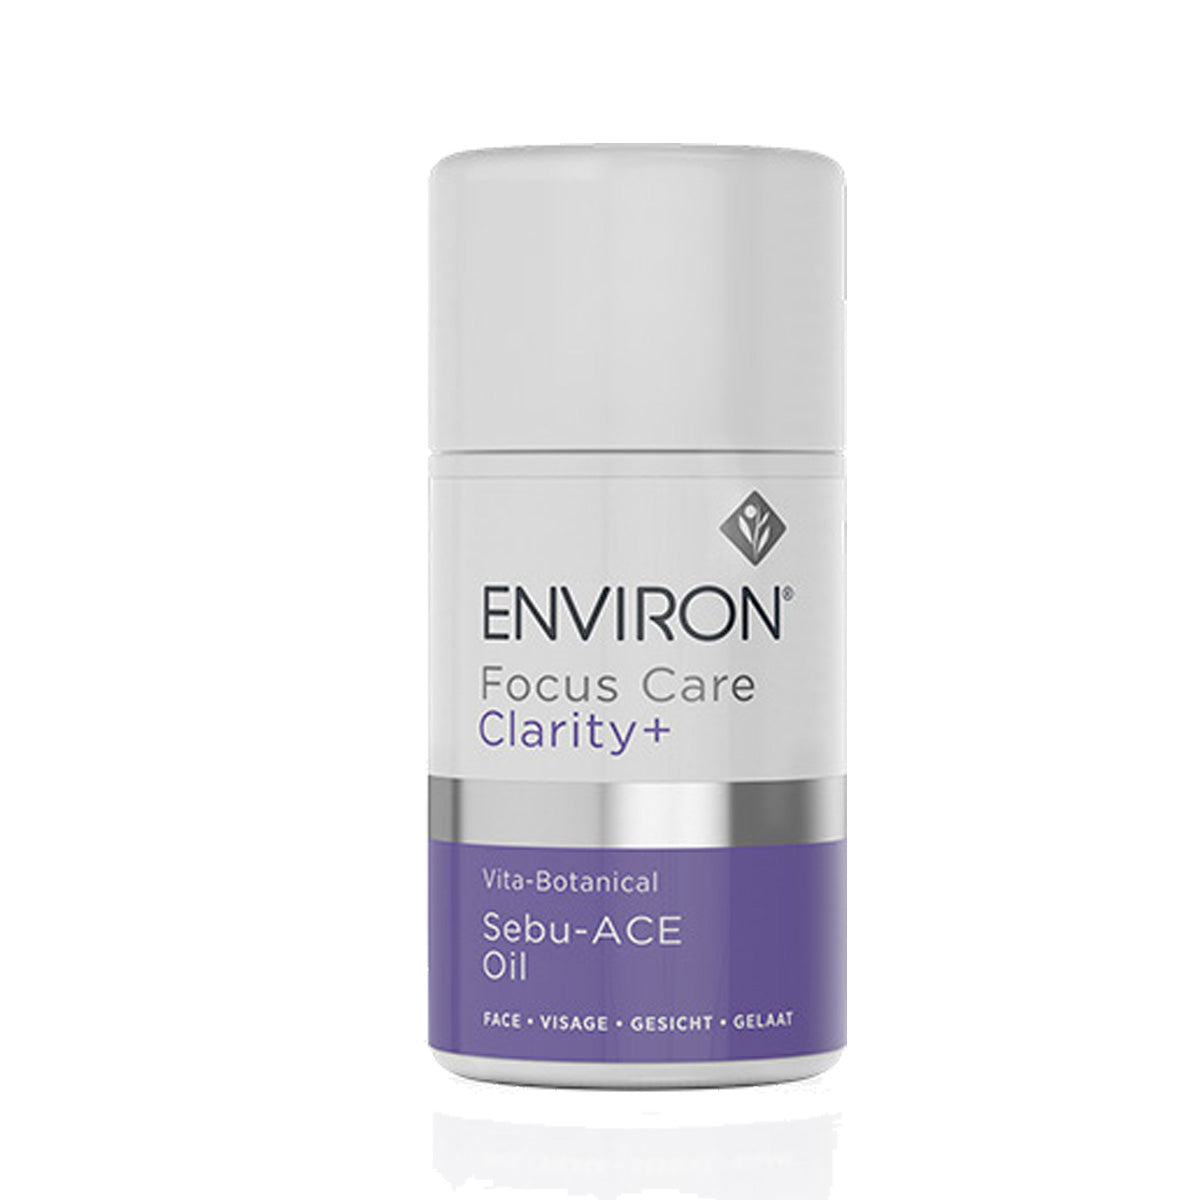 Focus Care Clarity+ Vita-Botanical Sebu-ACE Oil